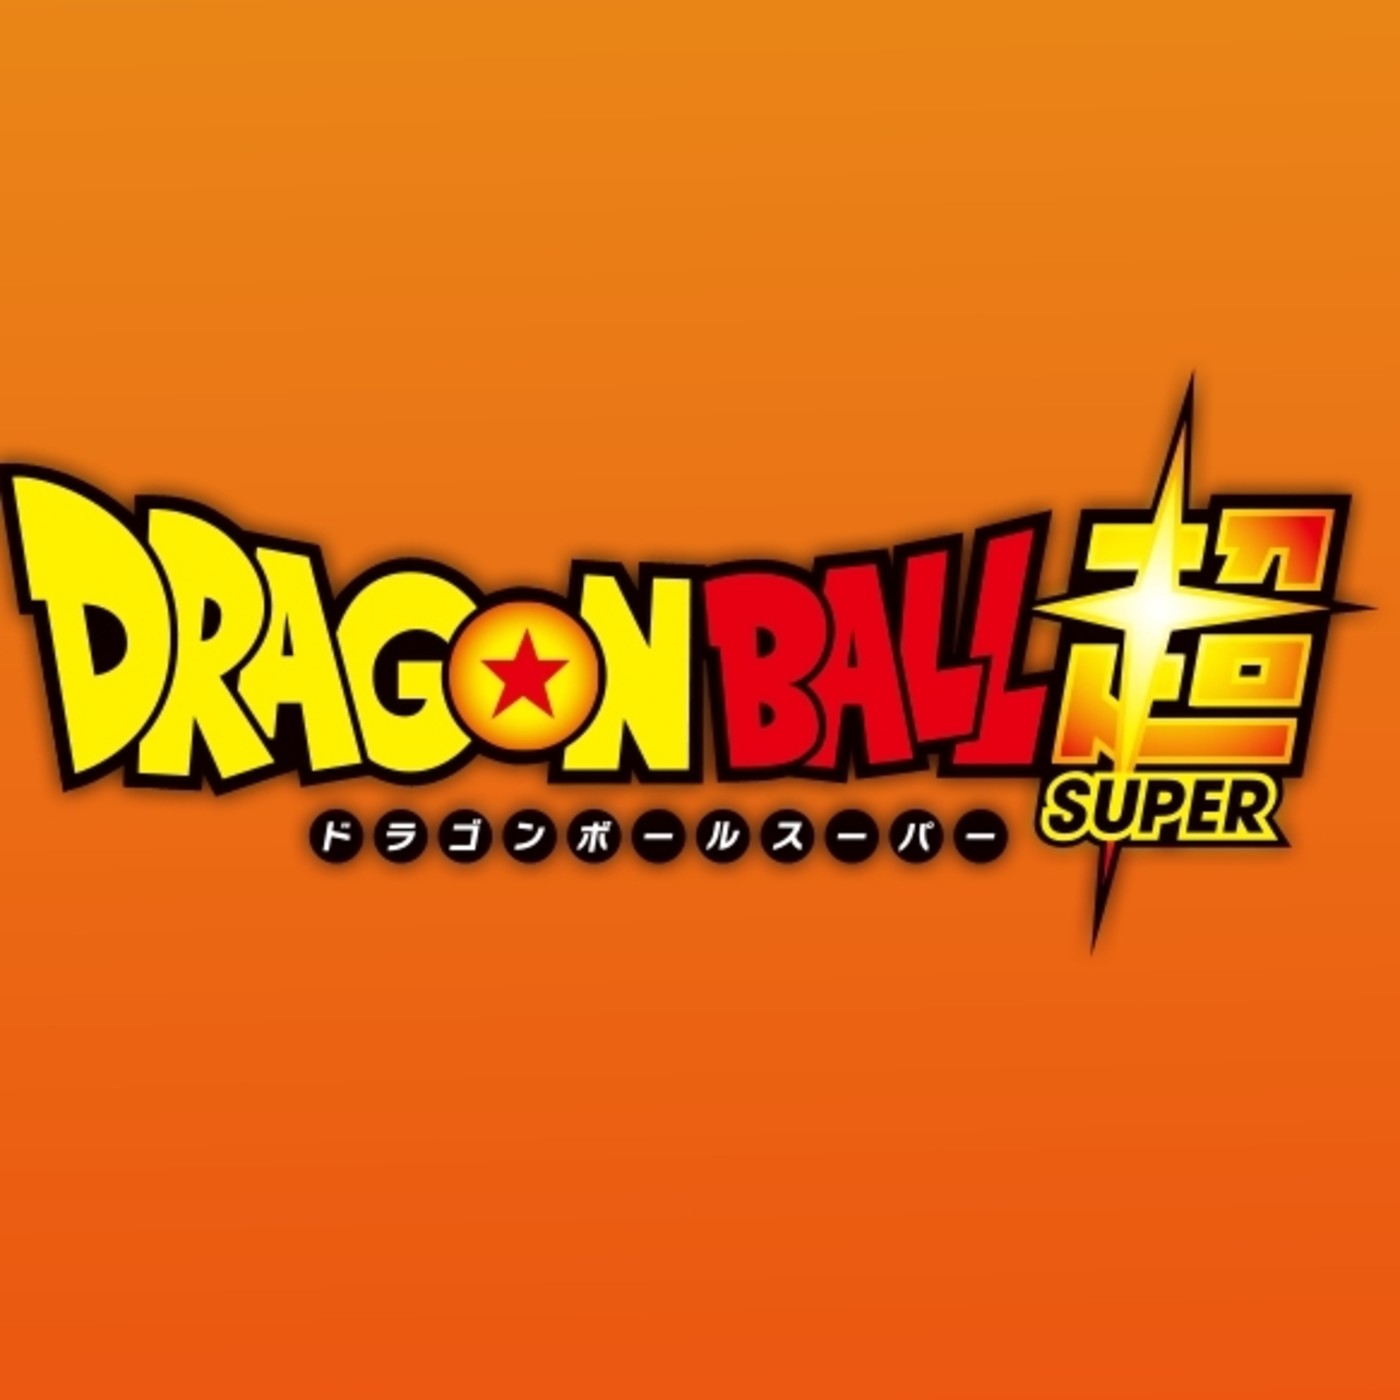 Gambatte Podcast | ’Dragon Ball Super’: Ep. 19, 20 y 21 en castellano